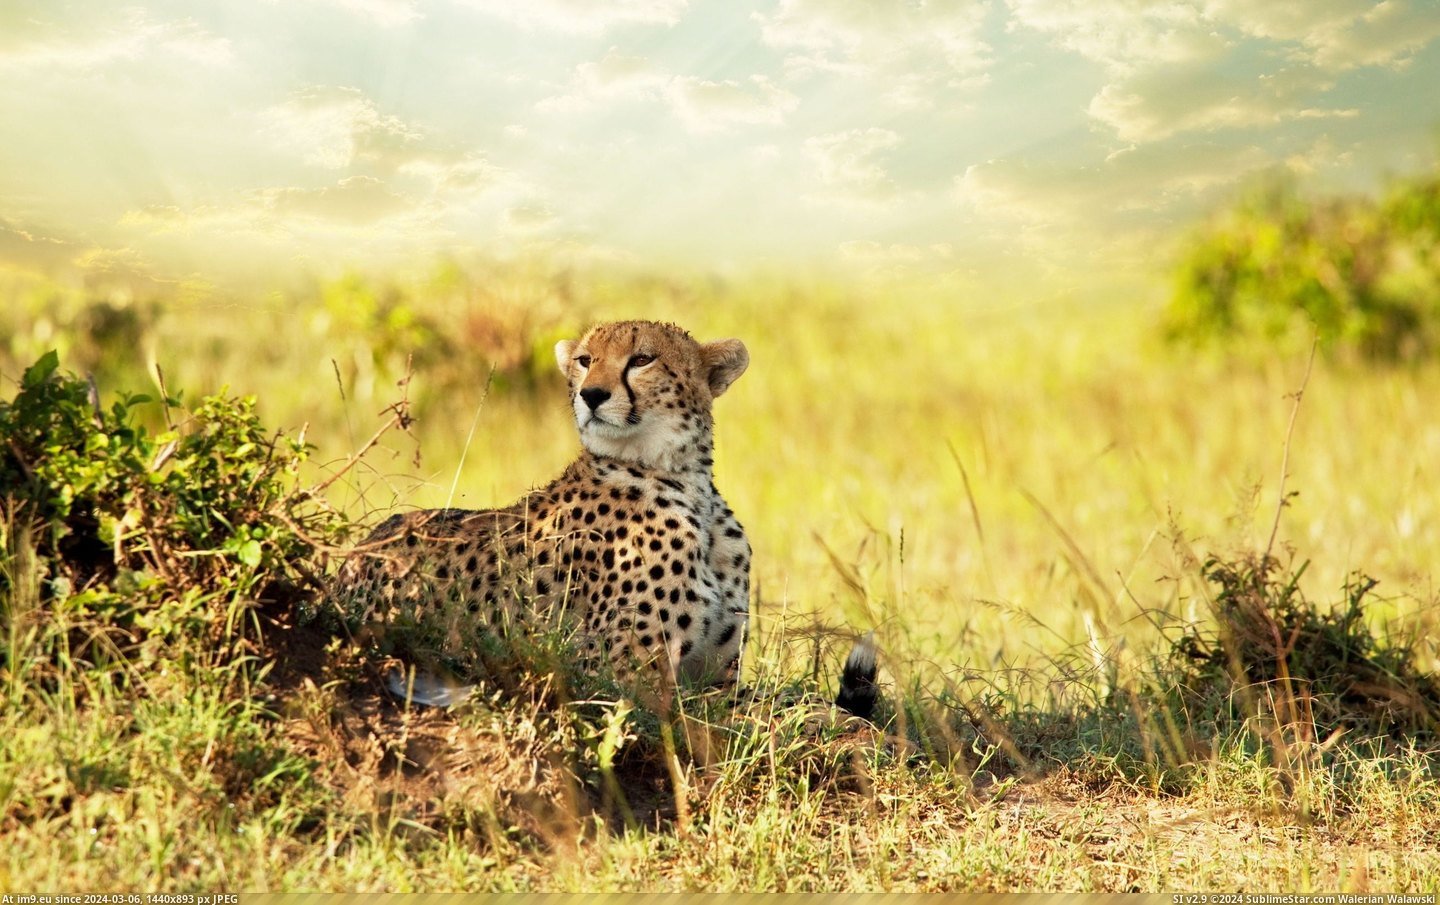 #Wallpaper #Wide #Savanna #Africa #Cheetah Cheetah Savanna Africa Wide HD Wallpaper Pic. (Изображение из альбом Unique HD Wallpapers))